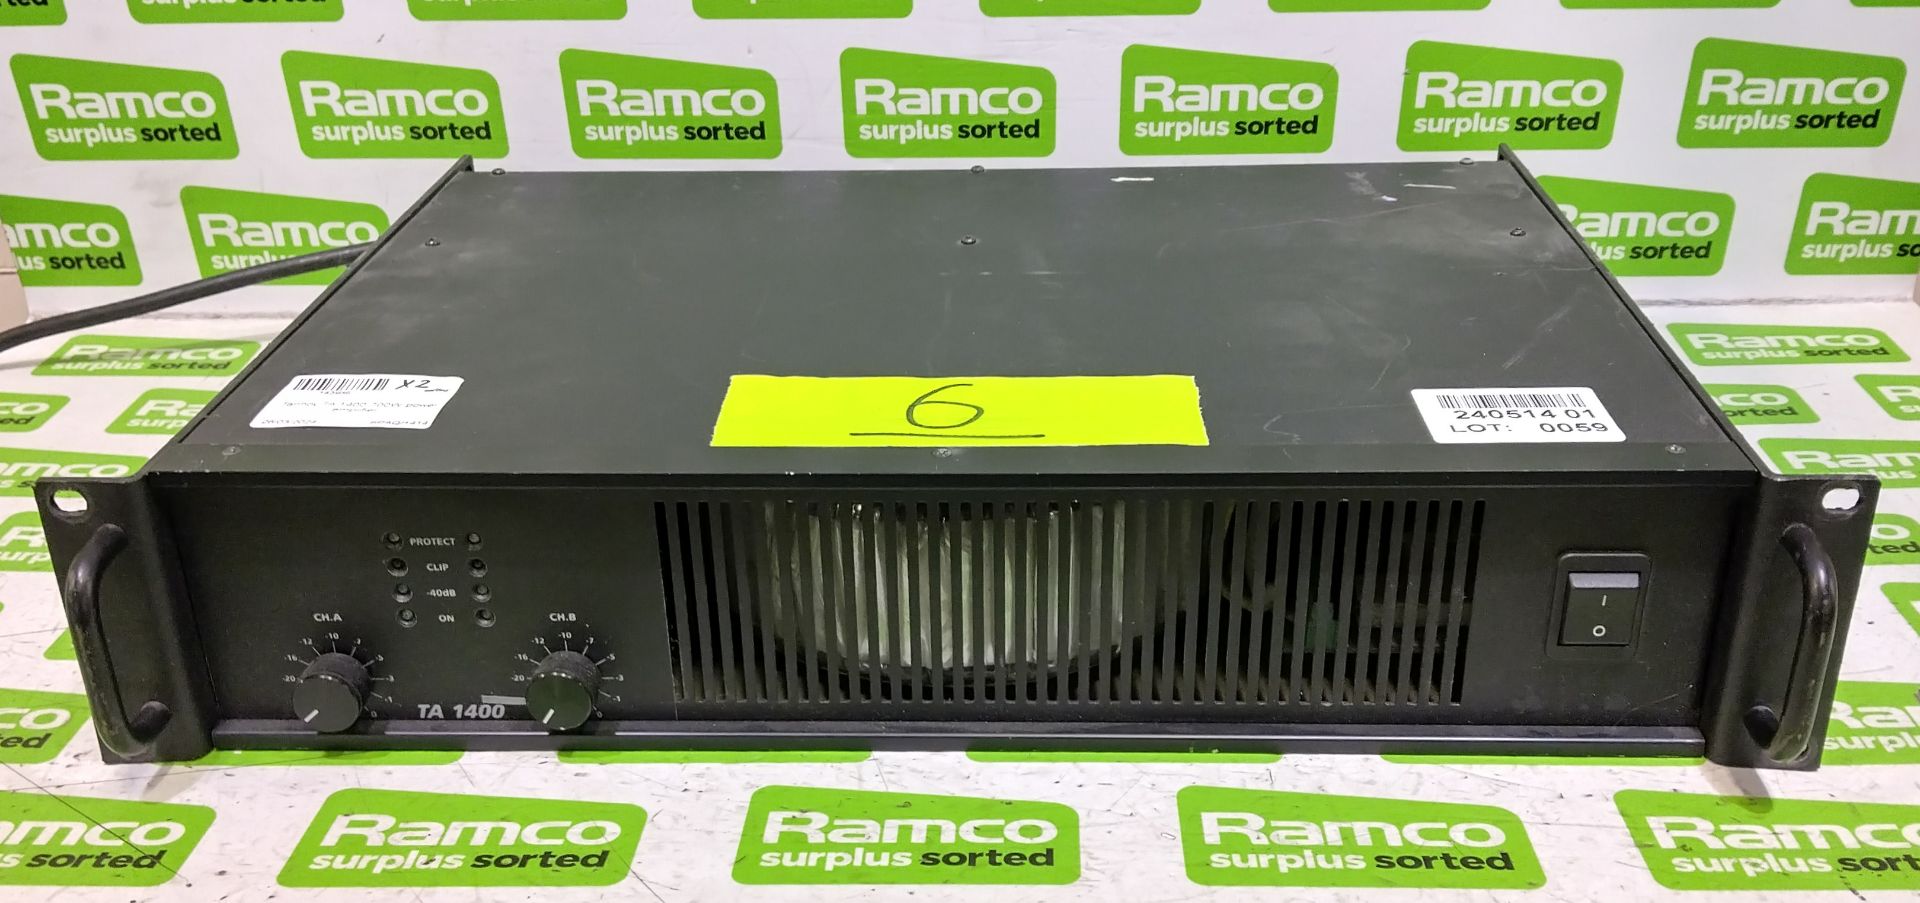 Tannoy TA 1400 700W power amplifier